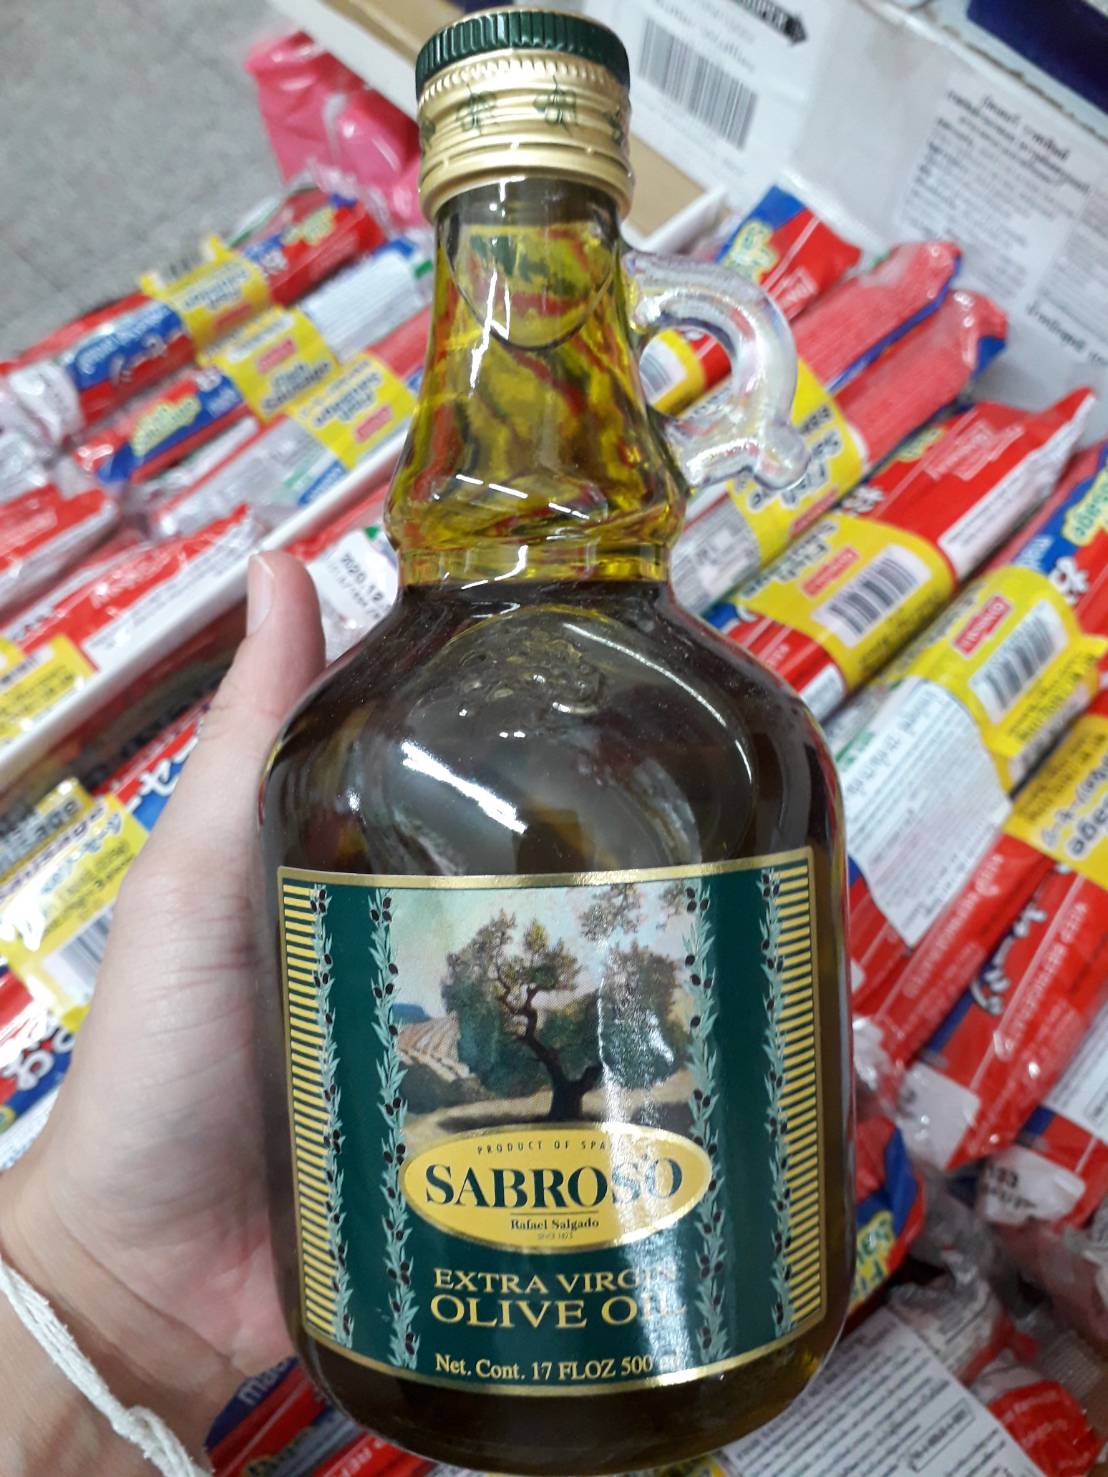 Sabroso Extra Virgin Olive Oil /ซาโบรโซ เอ็กซ์ตร้า เวอร์จิ้น โอลีฟ ออยล์ (น้ำมันมะกอกธรรมชาติไม่ผ่านกรรมวิธี 100%) ขนาด 500มล.